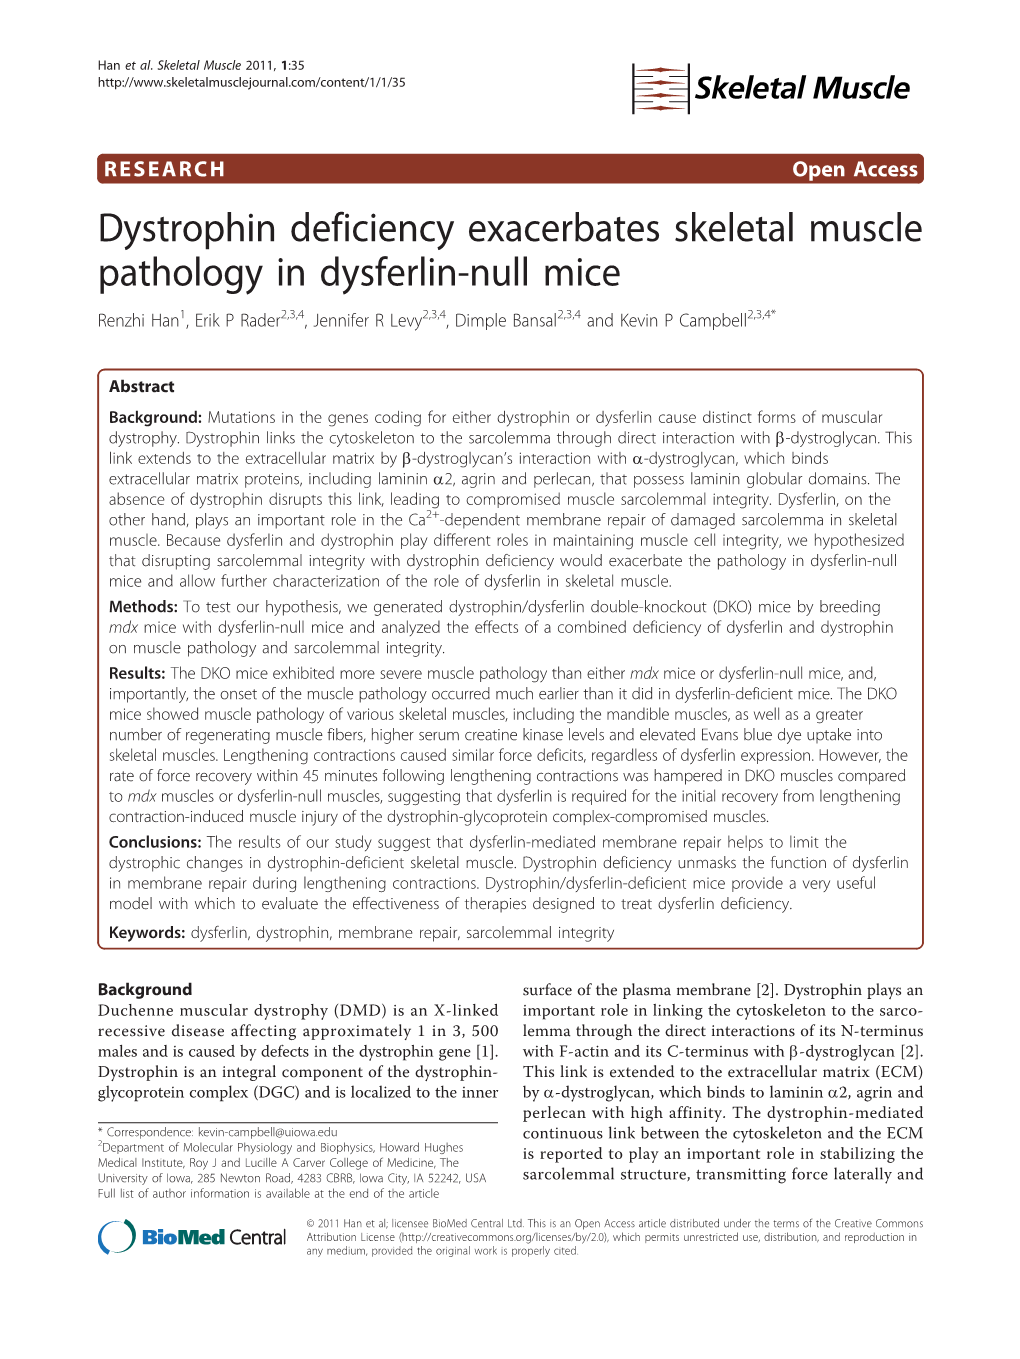 Dystrophin Deficiency Exacerbates Skeletal Muscle Pathology In